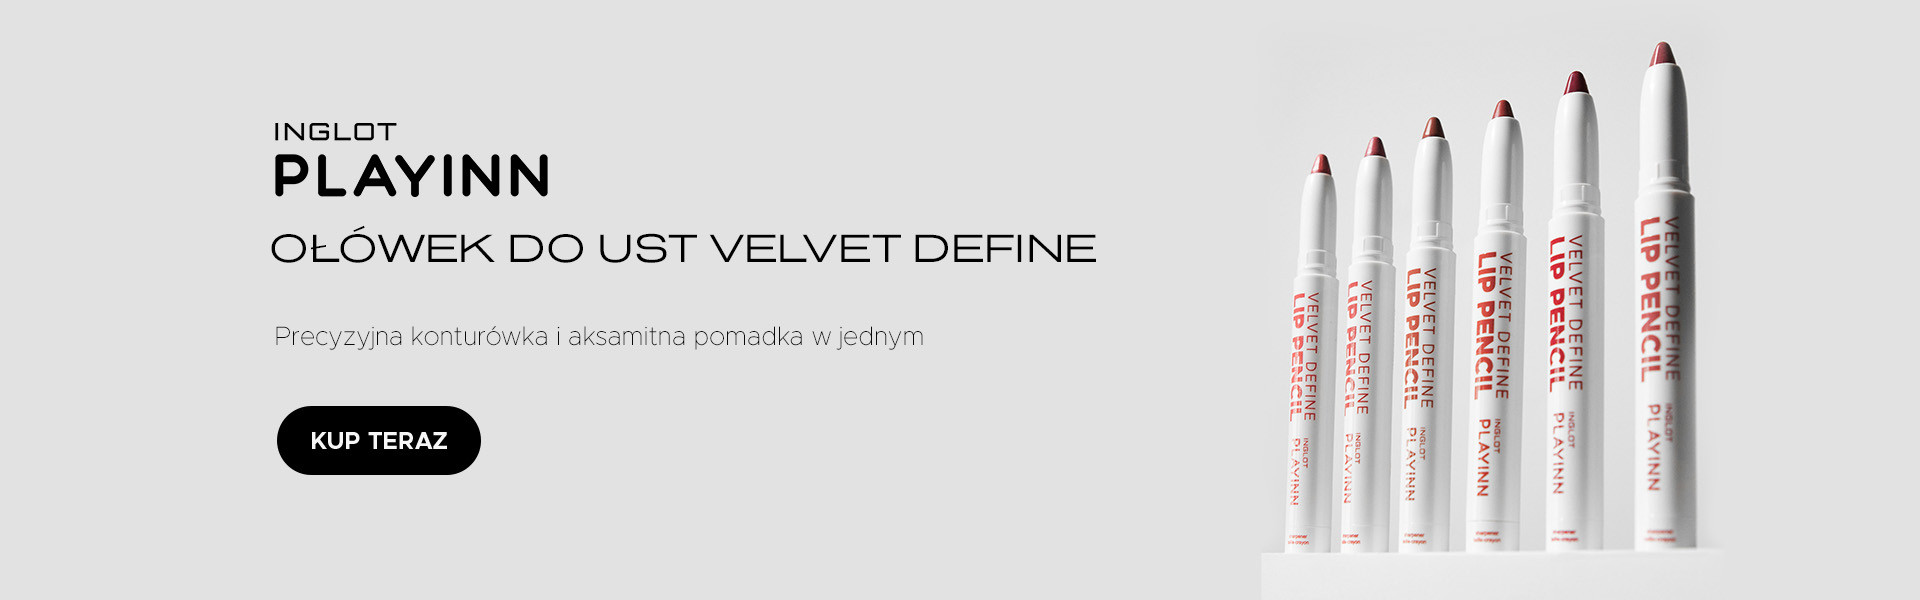 Ołówek do ust Velvet Define INGLOT PLAYINN